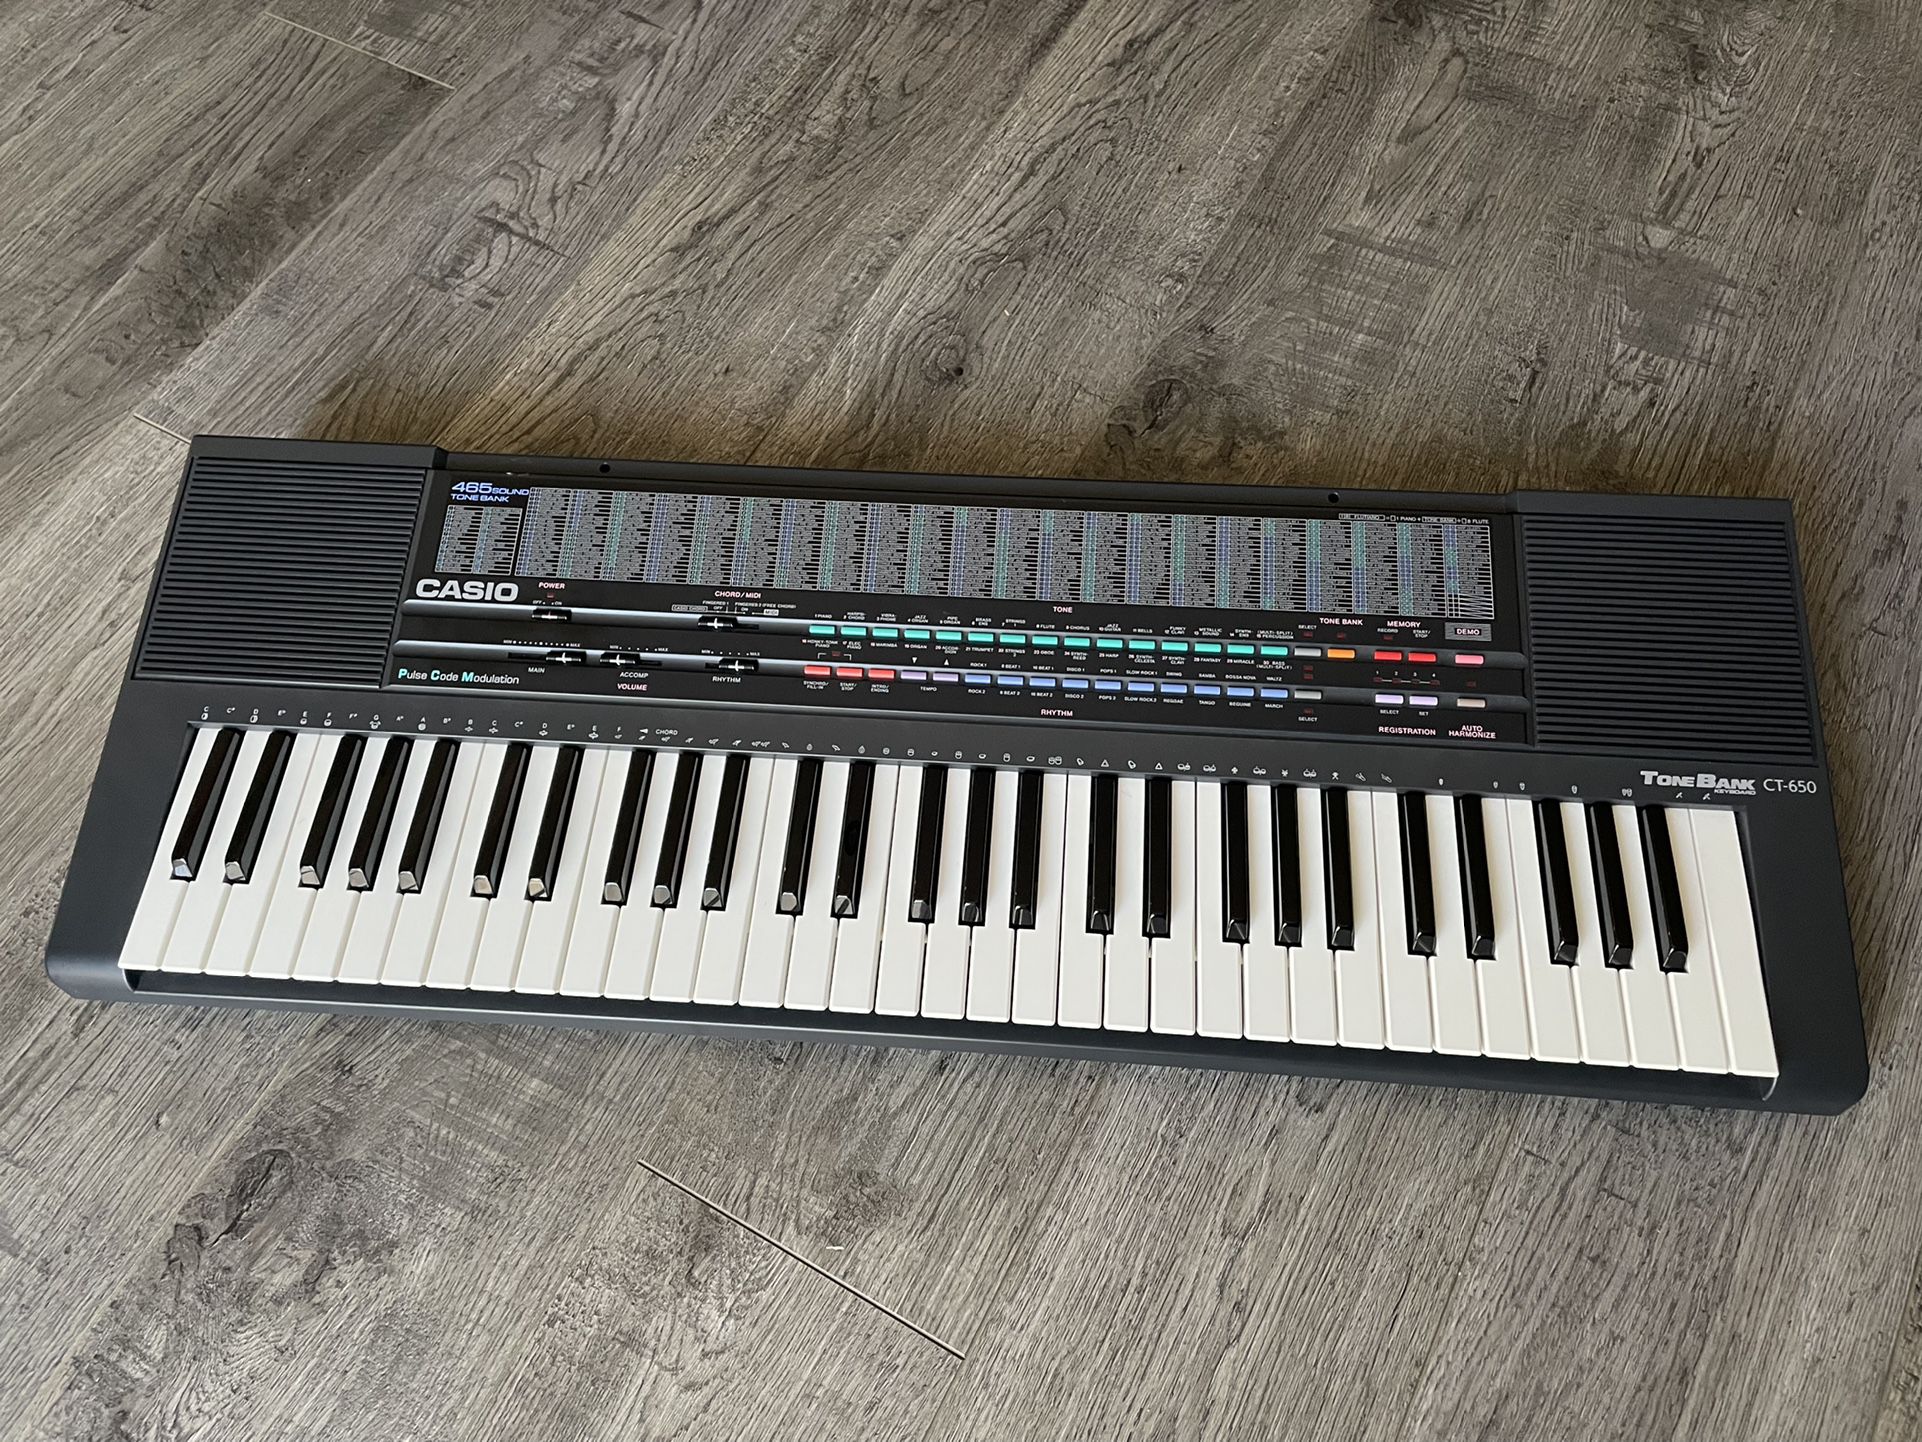 bro Isolere slette Vintage Casio Keyboard for Sale in Los Angeles, CA - OfferUp